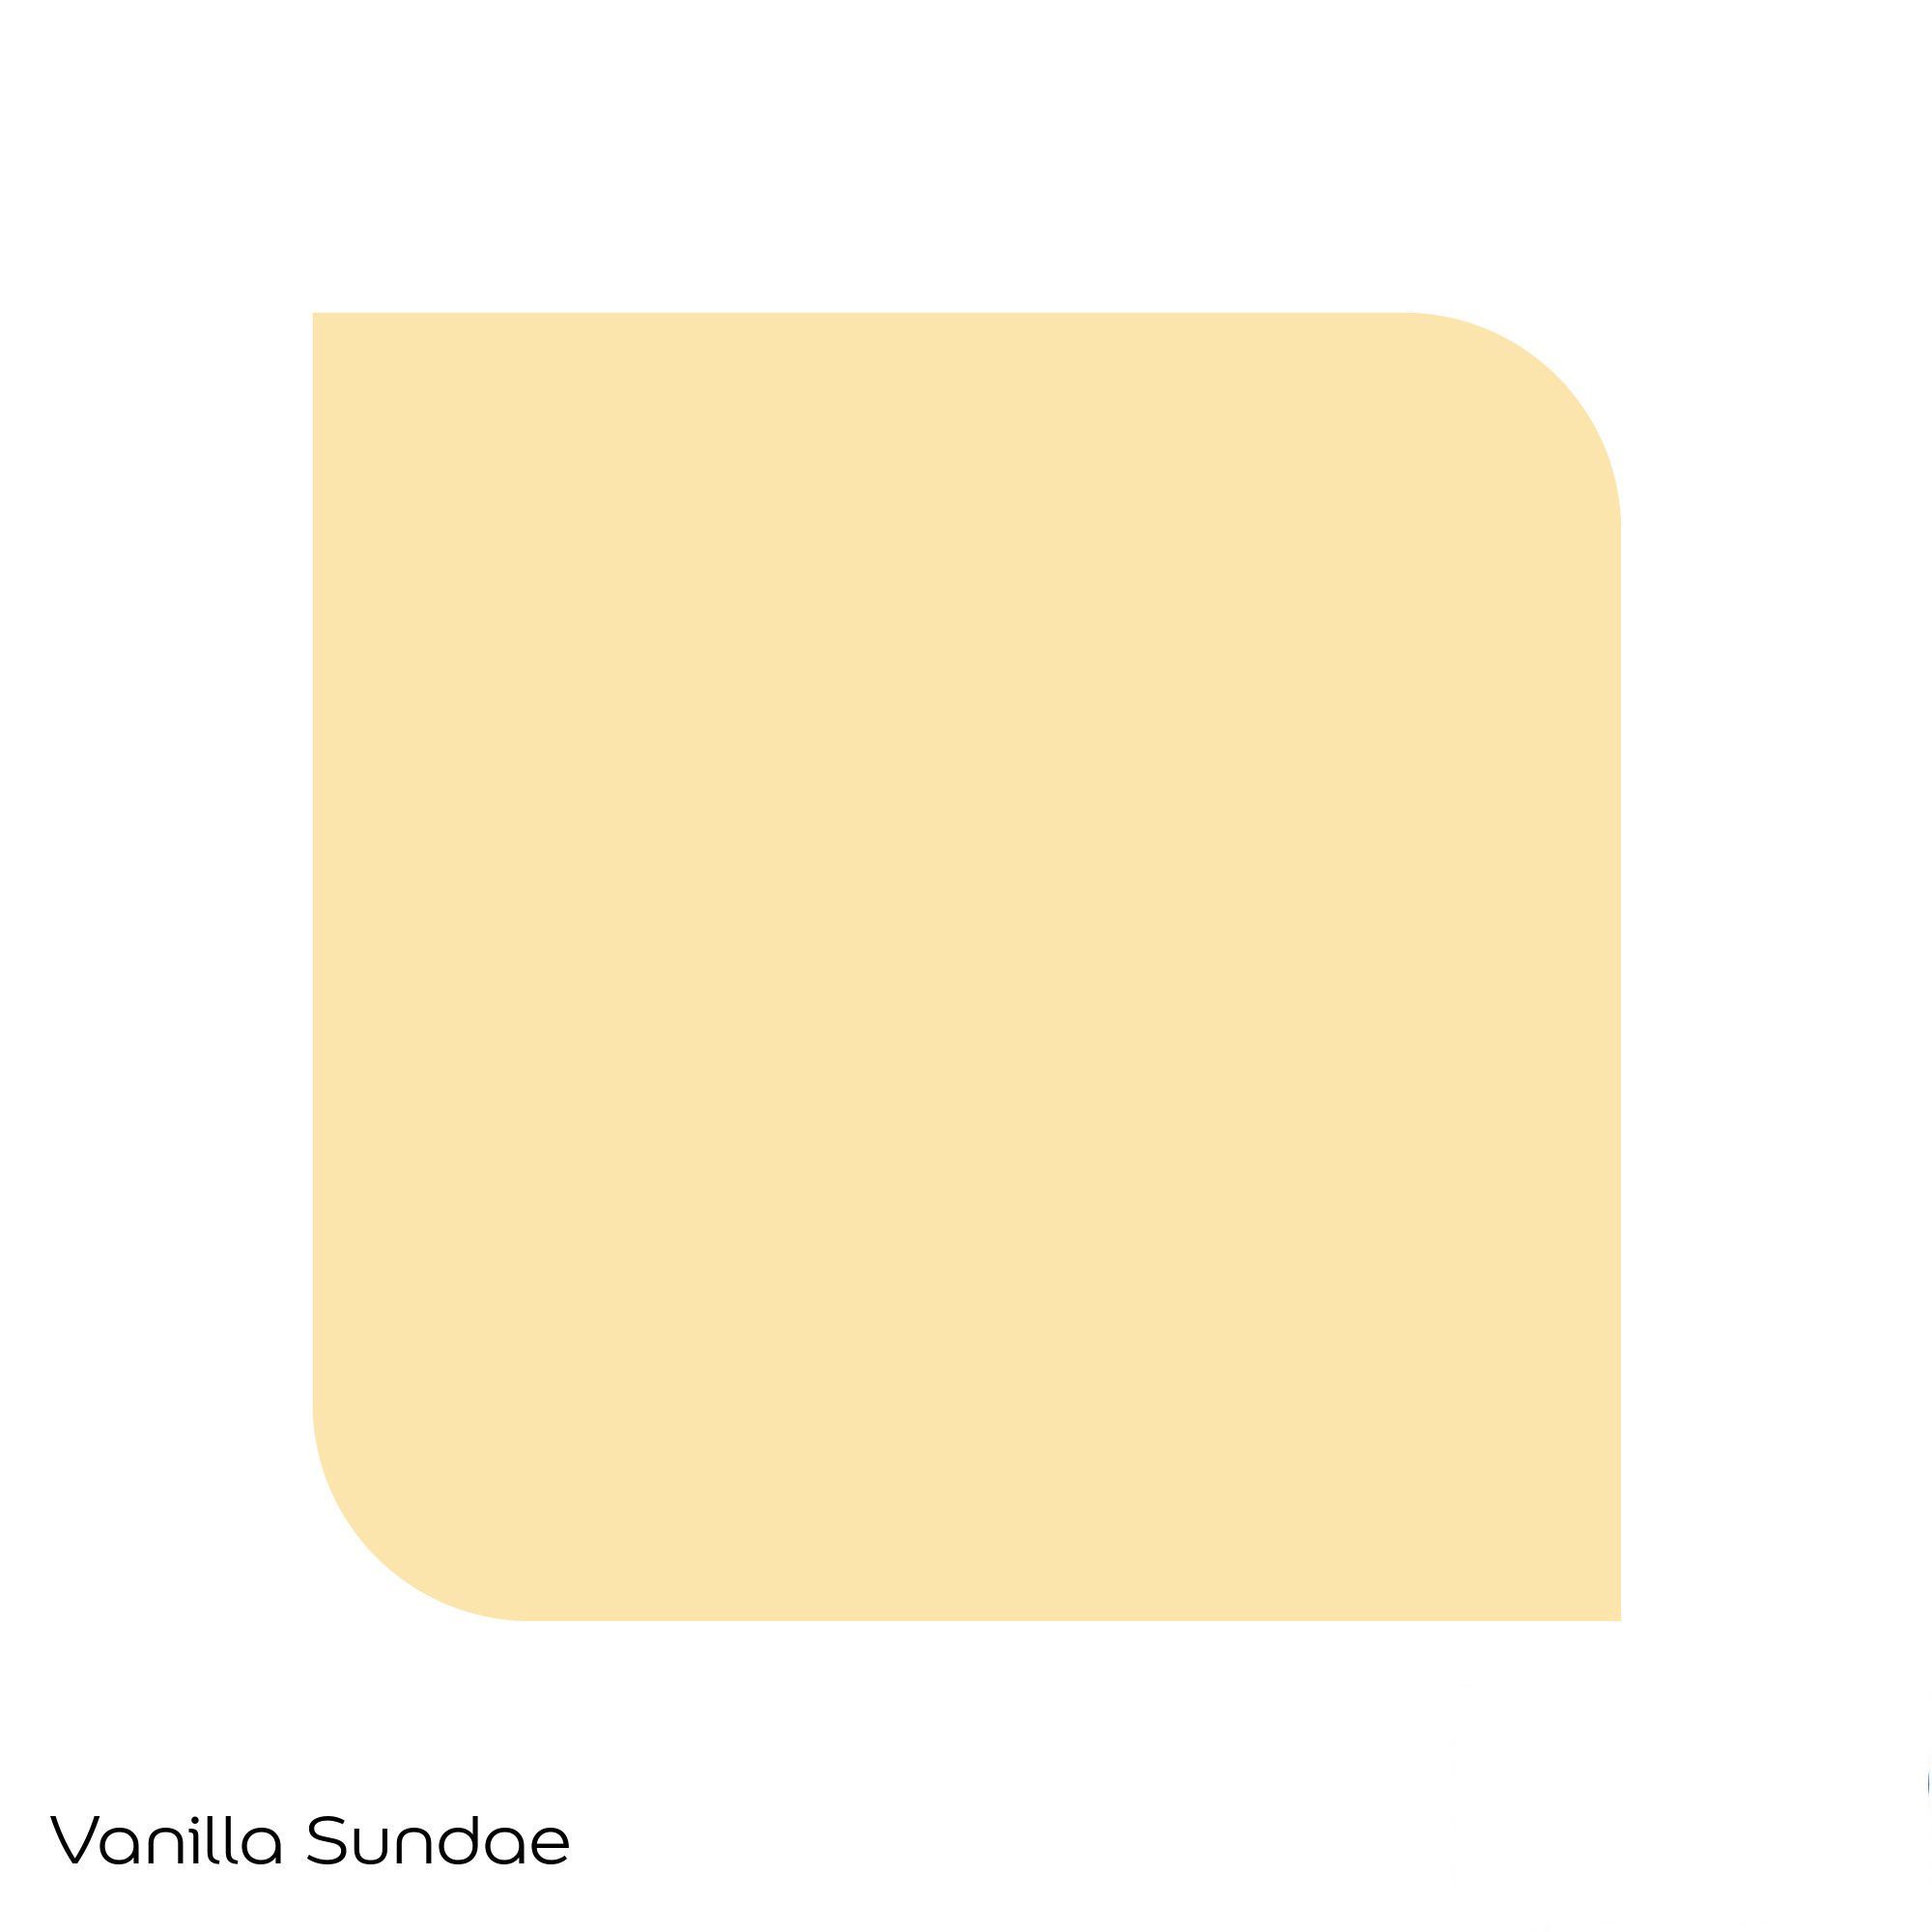 Dulux Standard Vanilla sundae Matt Emulsion paint, 30ml Tester pot